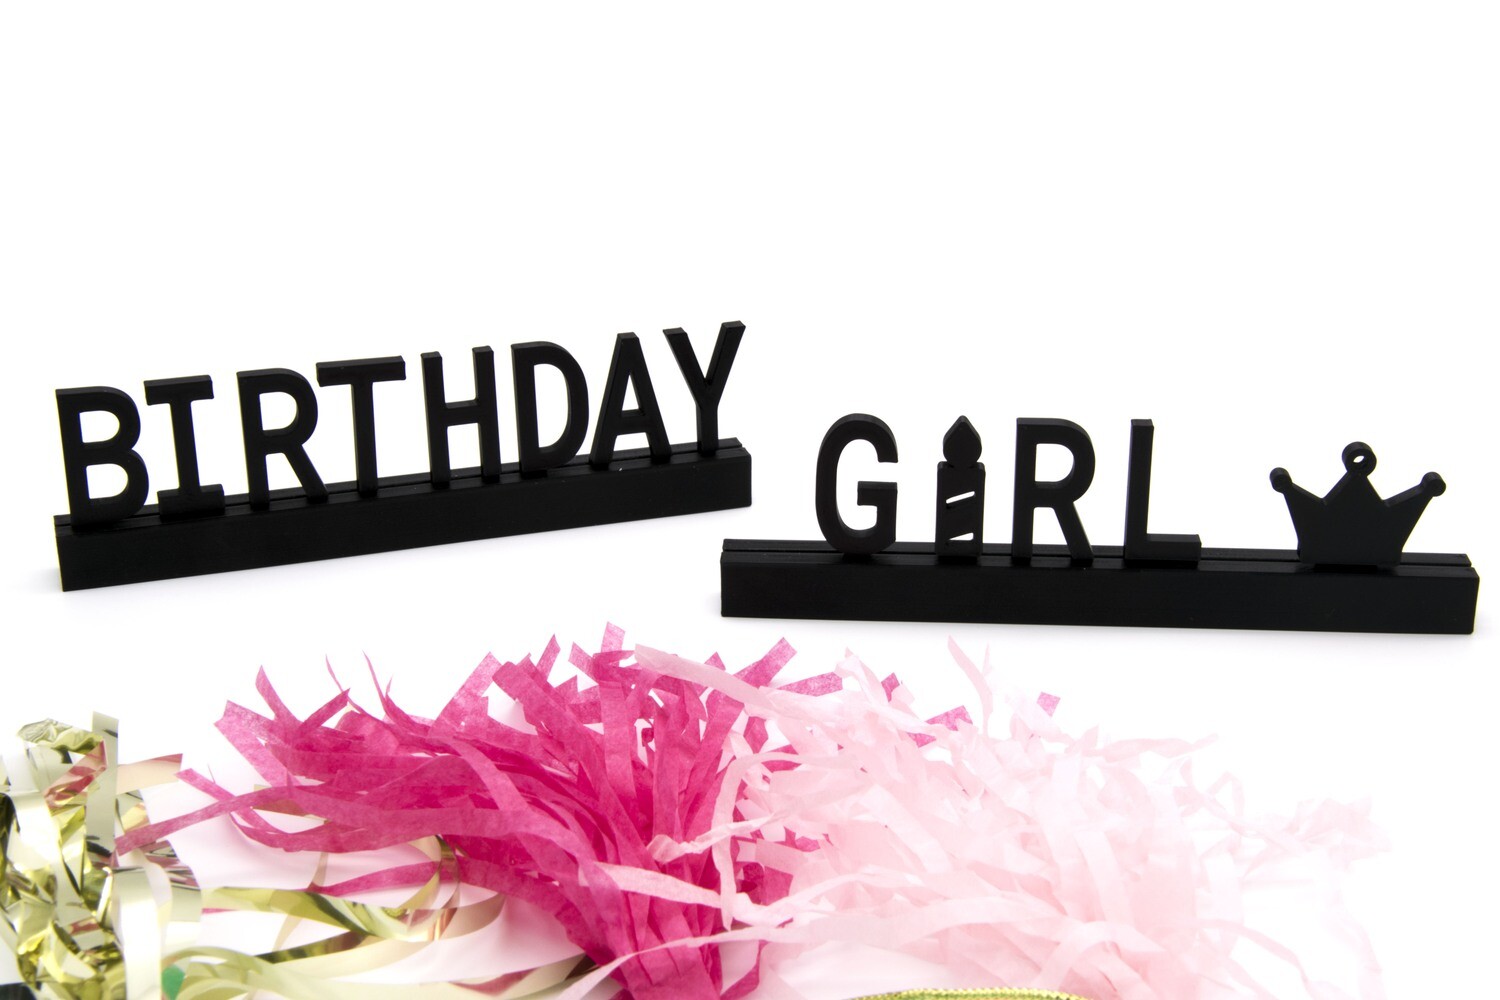 "Birthday Girl"